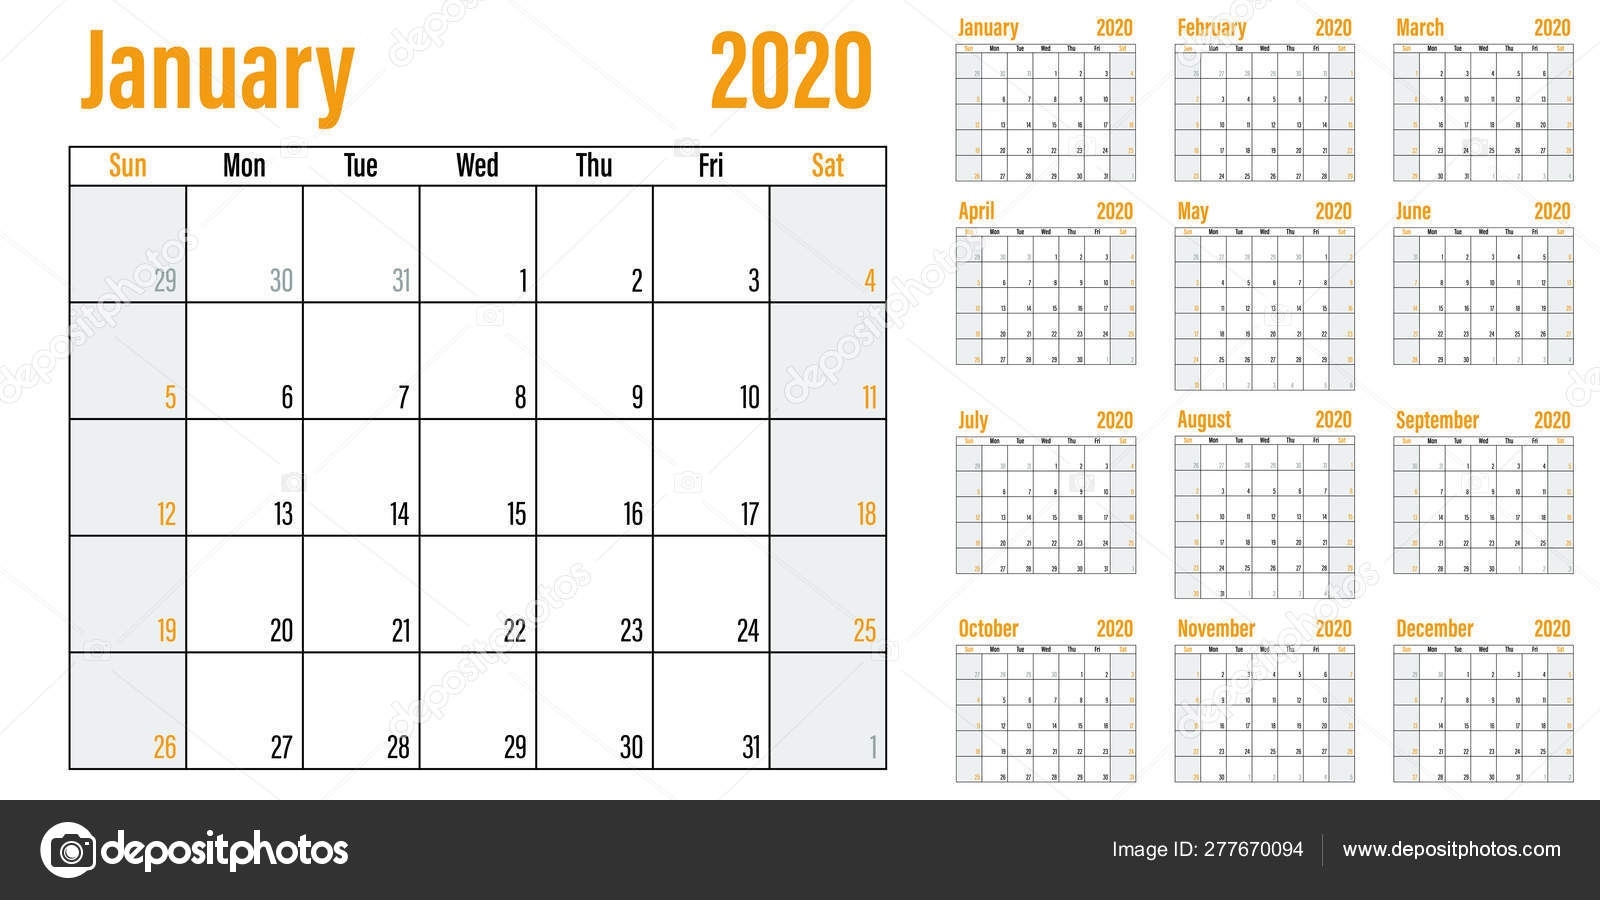 Calendar Planner 2020 Template Vector Illustration All Calendar Of 2020 Indicating Week Numbers